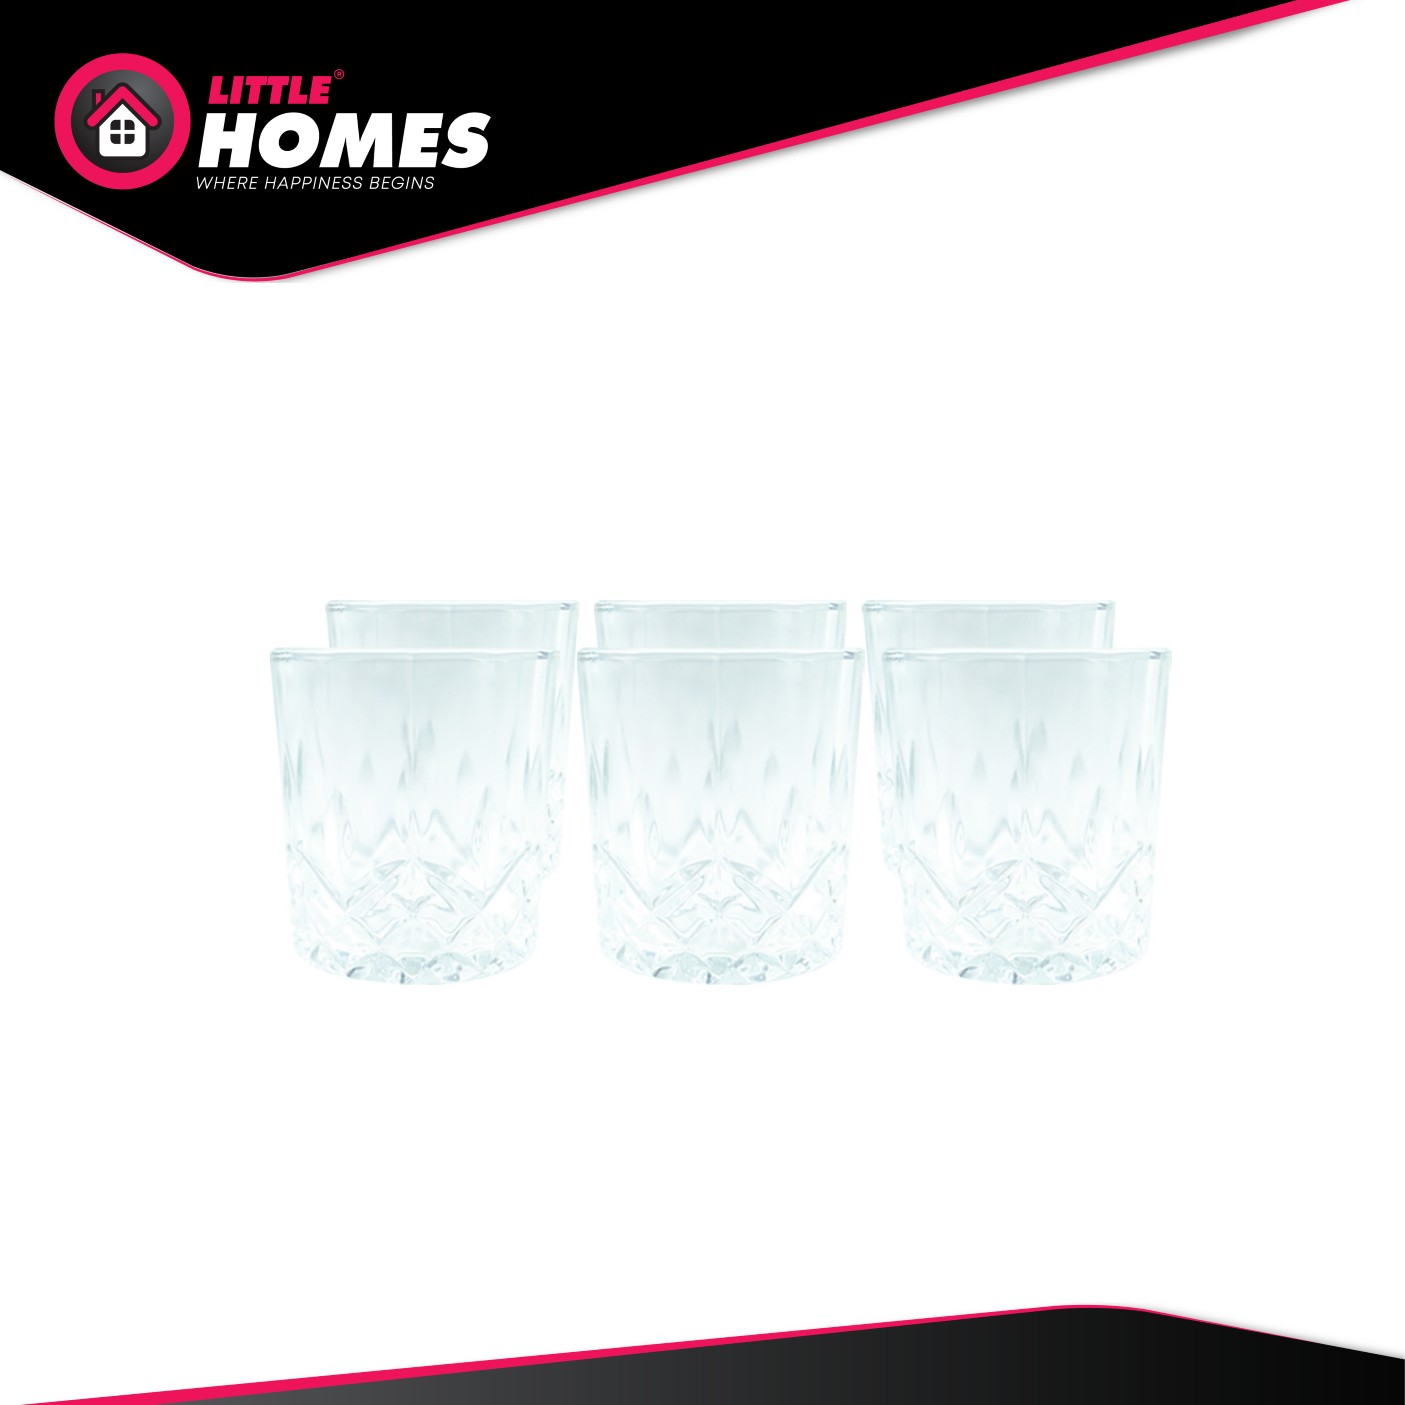 Little Homes Diamond Glass Jug with Glass Tumbler Set of 7pcs